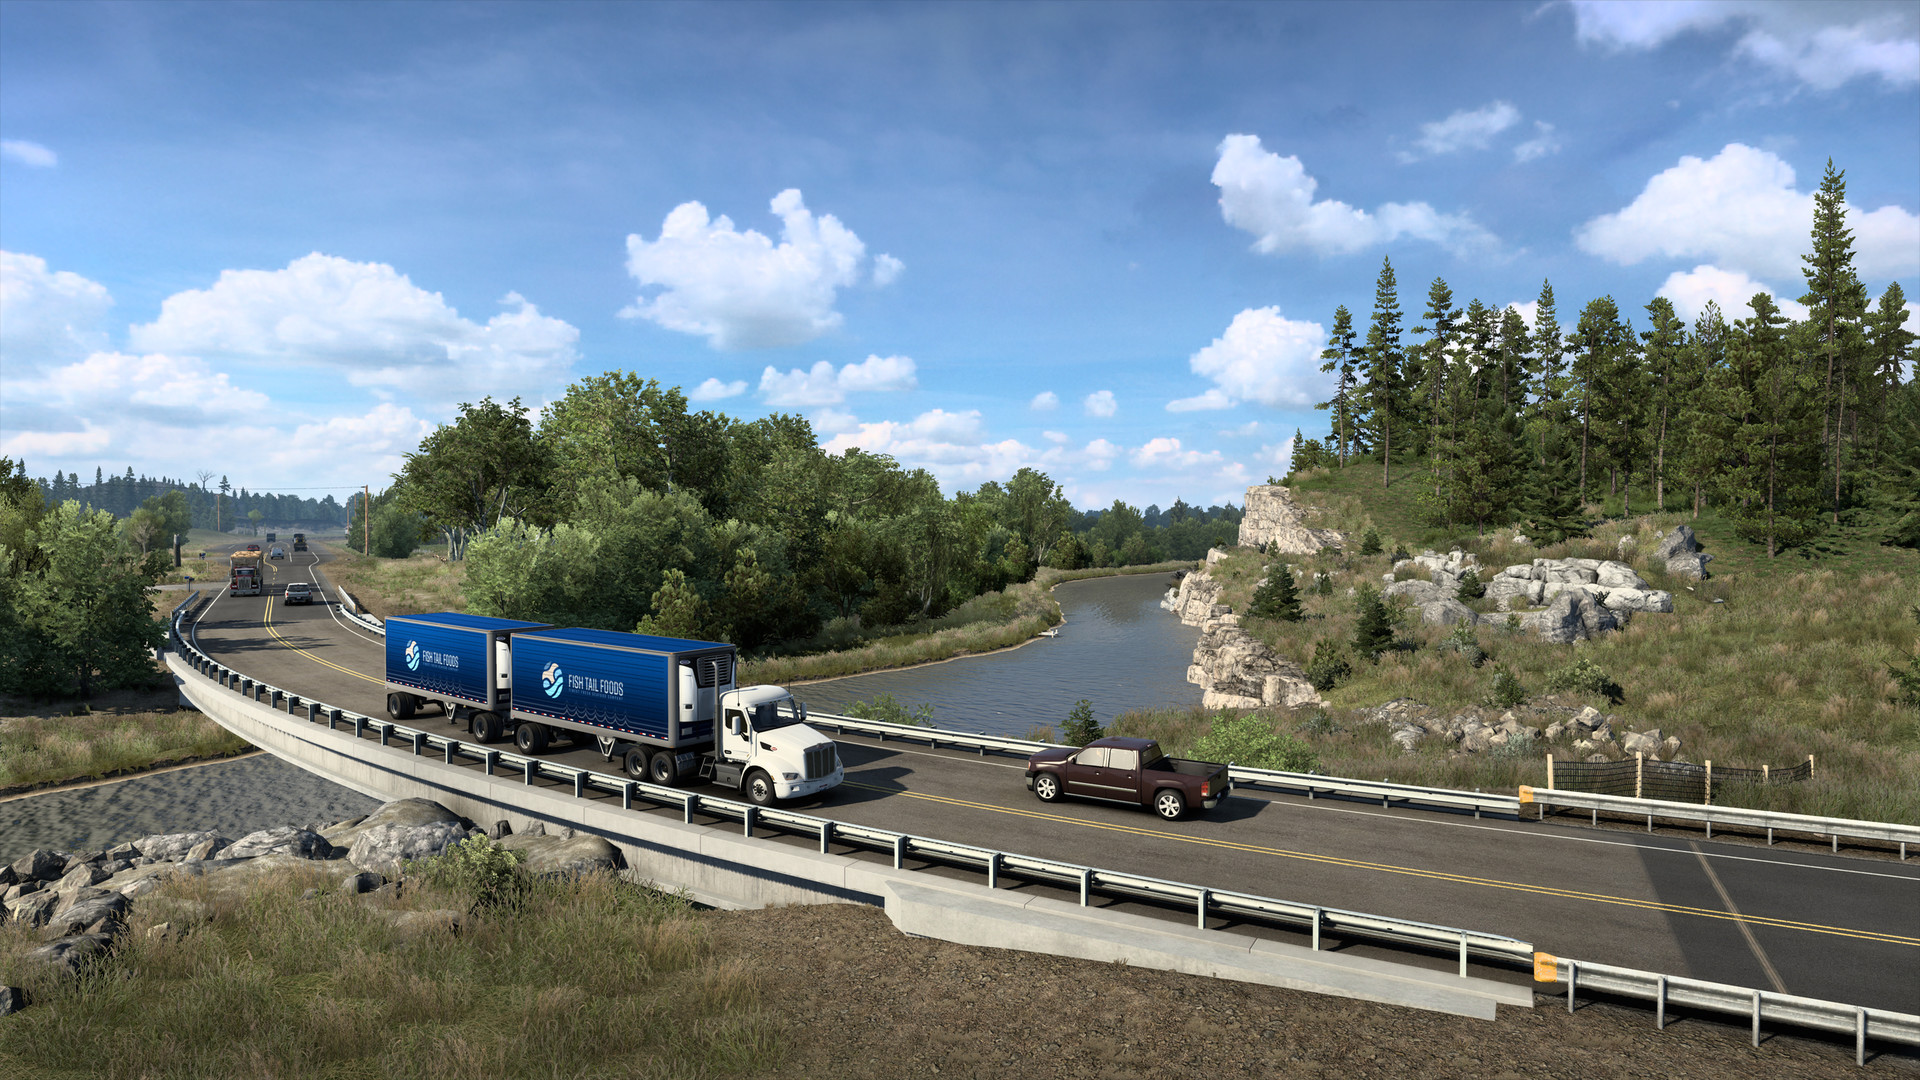 American Truck Simulator - Montana DLC EU V2 Steam Altergift